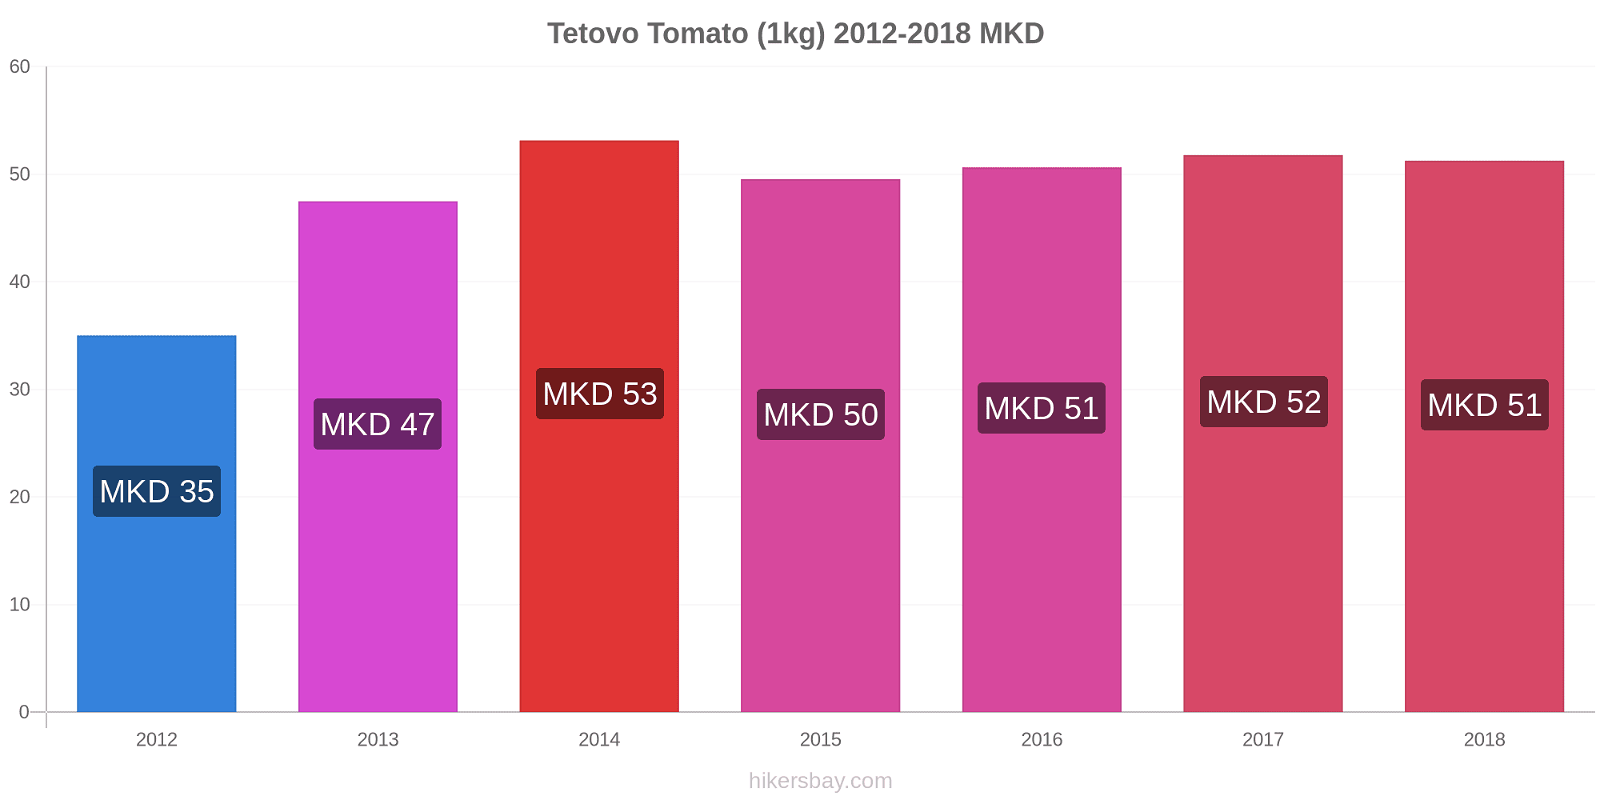 Tetovo price changes Tomato (1kg) hikersbay.com